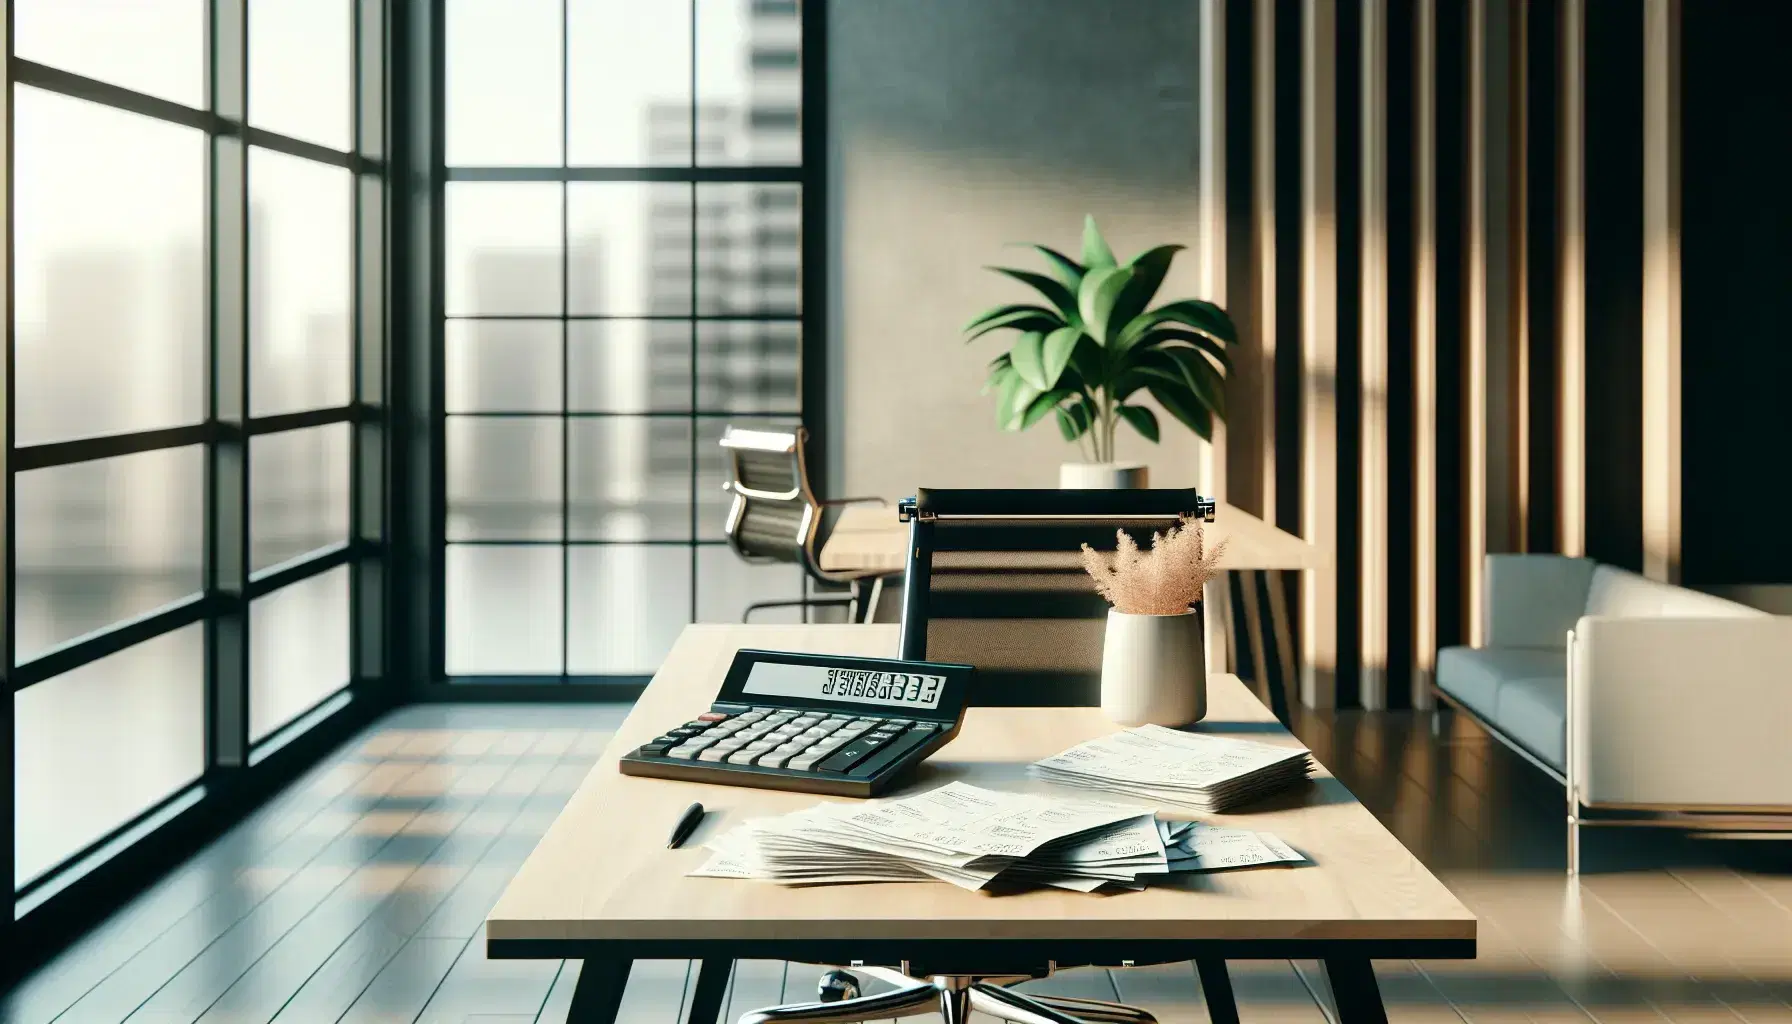 Oficina moderna y luminosa con mesa de madera, calculadora negra, recibos desordenados, silla ergonómica y planta interior, con luz natural de ventana.